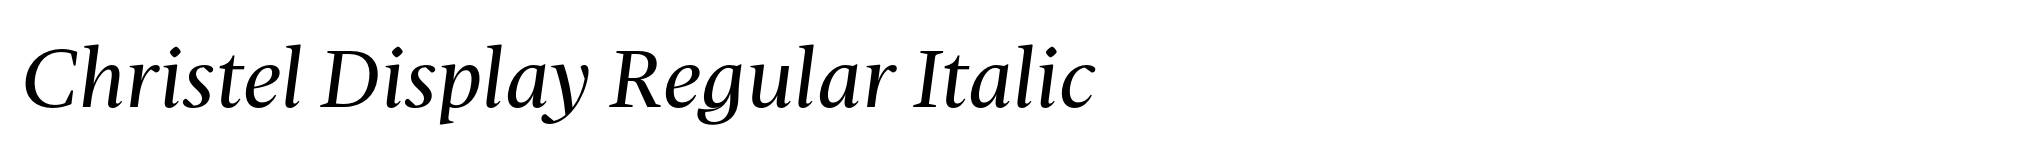 Christel Display Regular Italic image